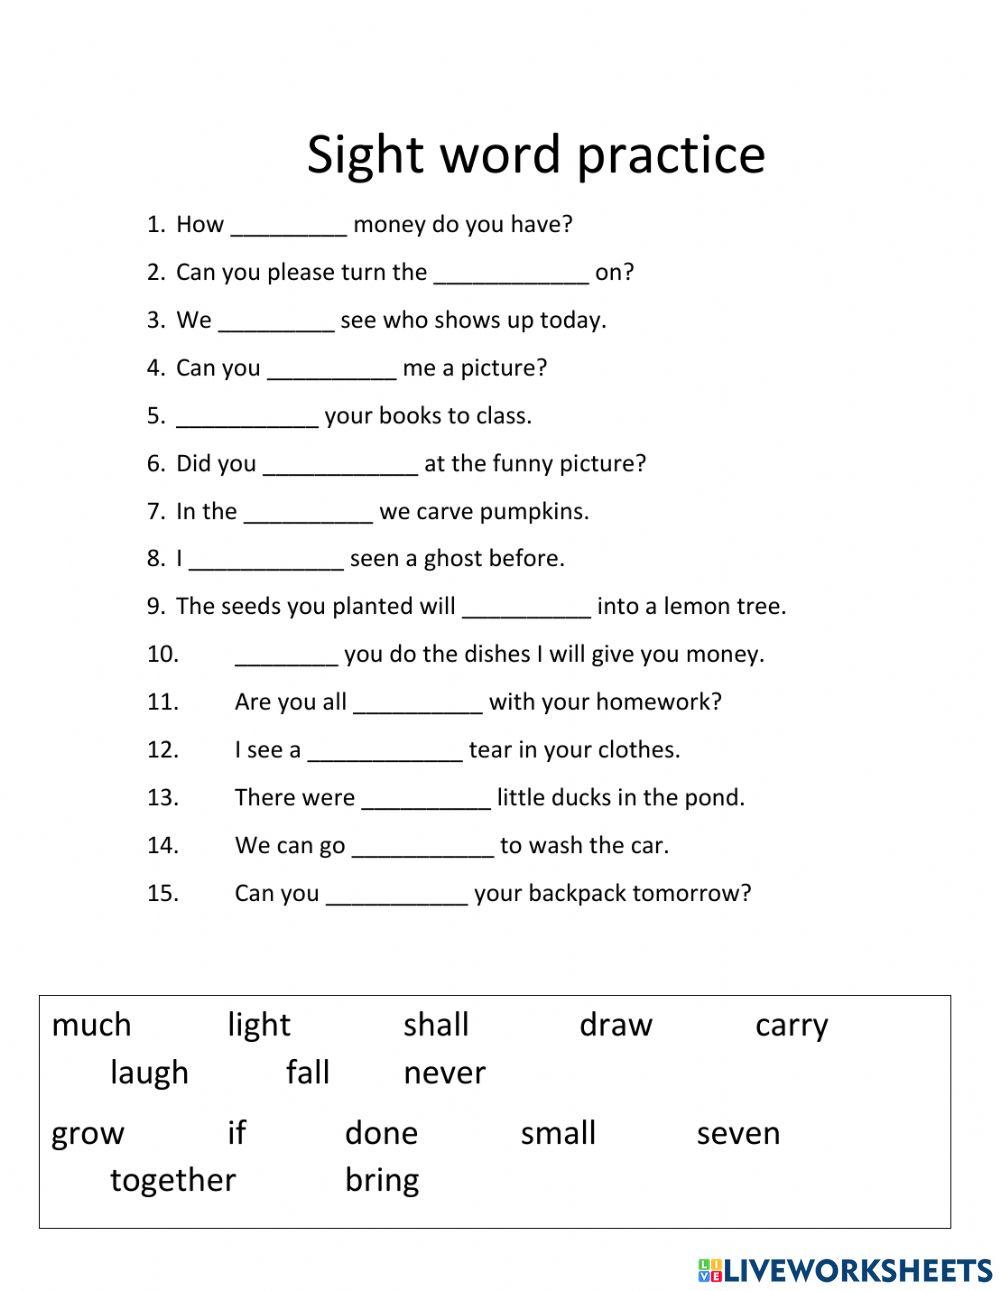 Sight word practice